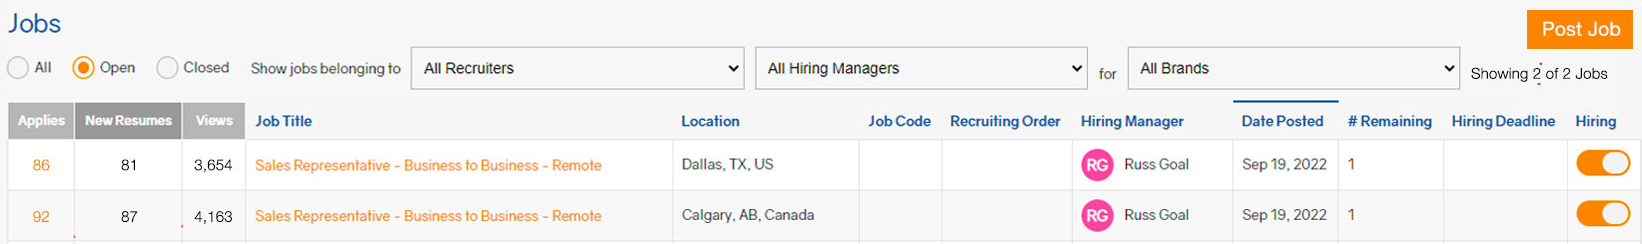 Jobs List